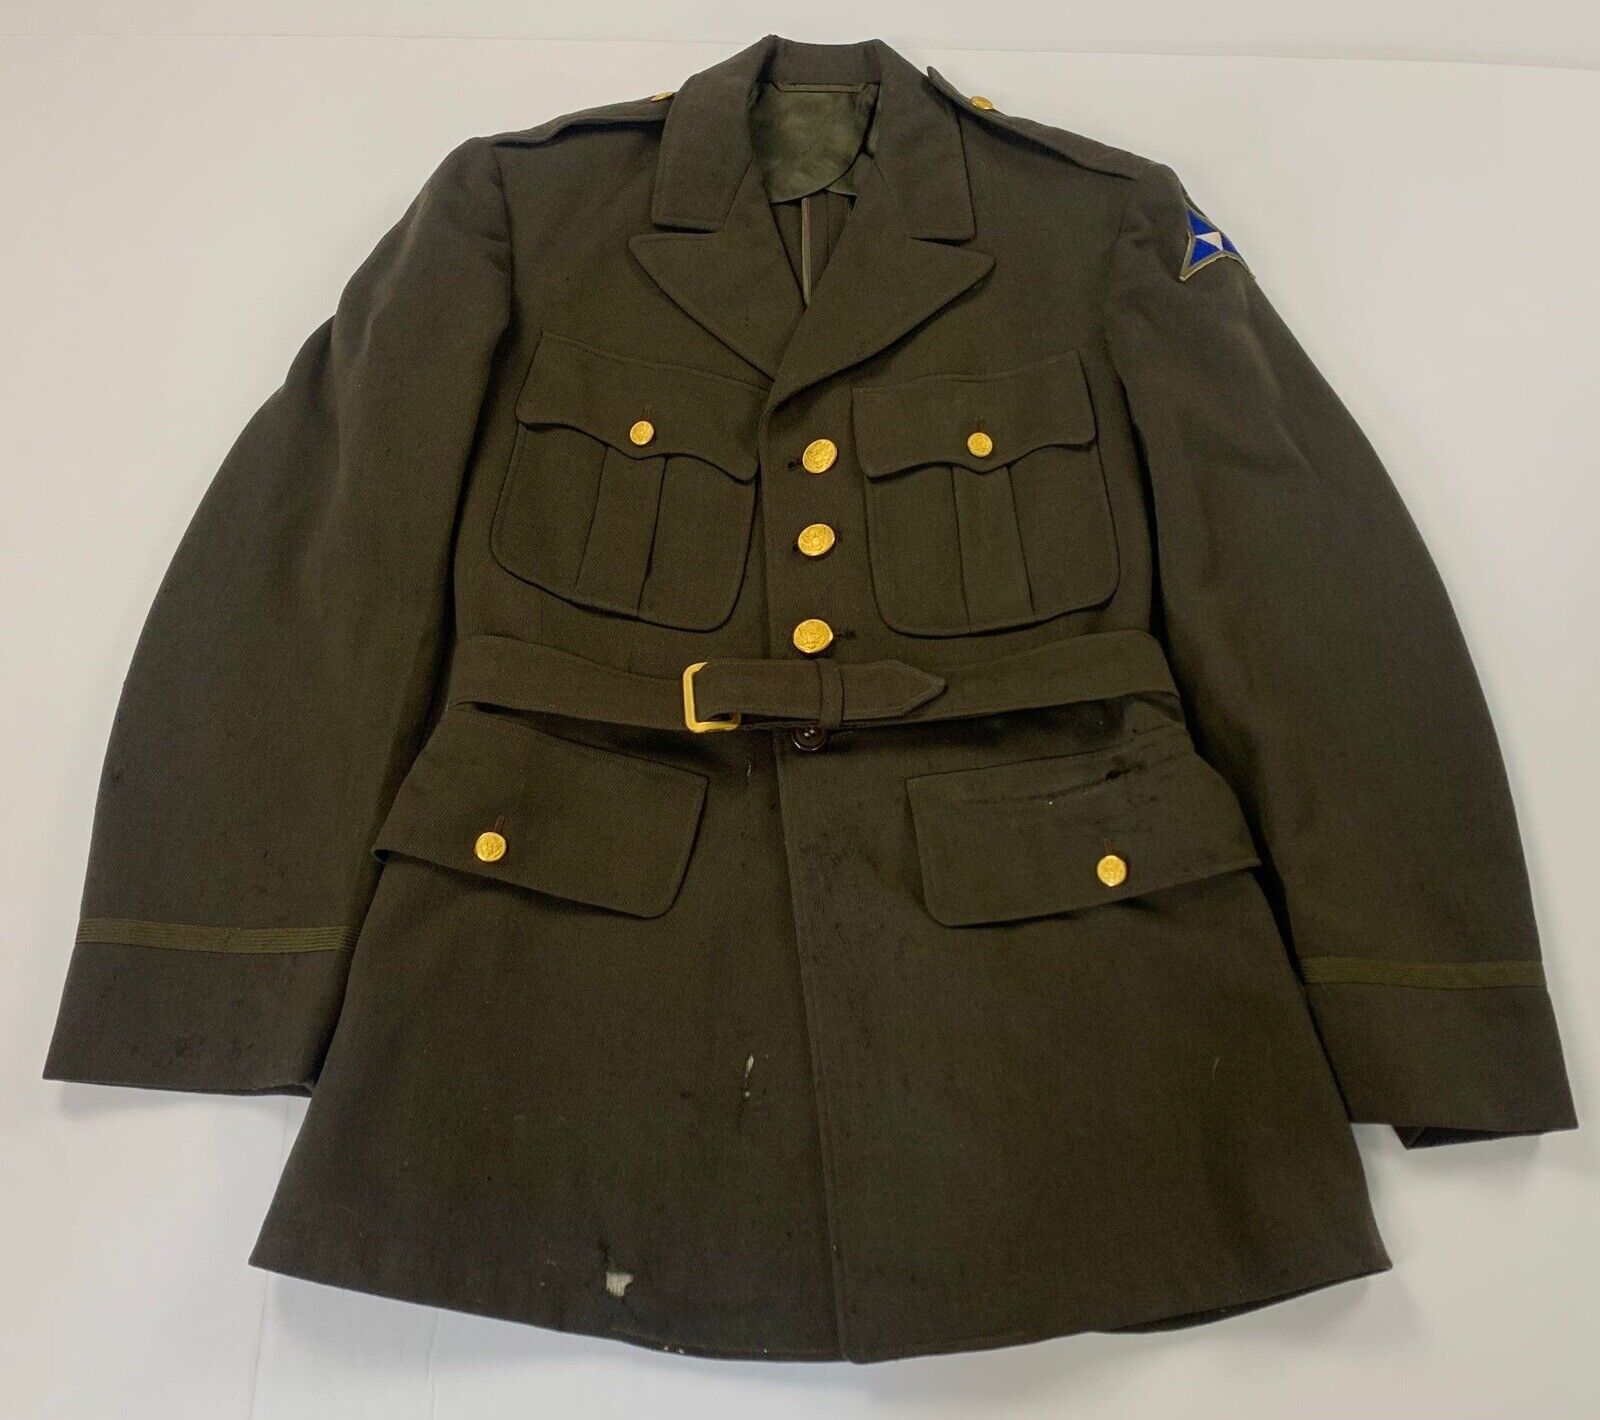 VTG 1942 WWII Regulation Army Officer's Wool Overcoat Short Style Coat